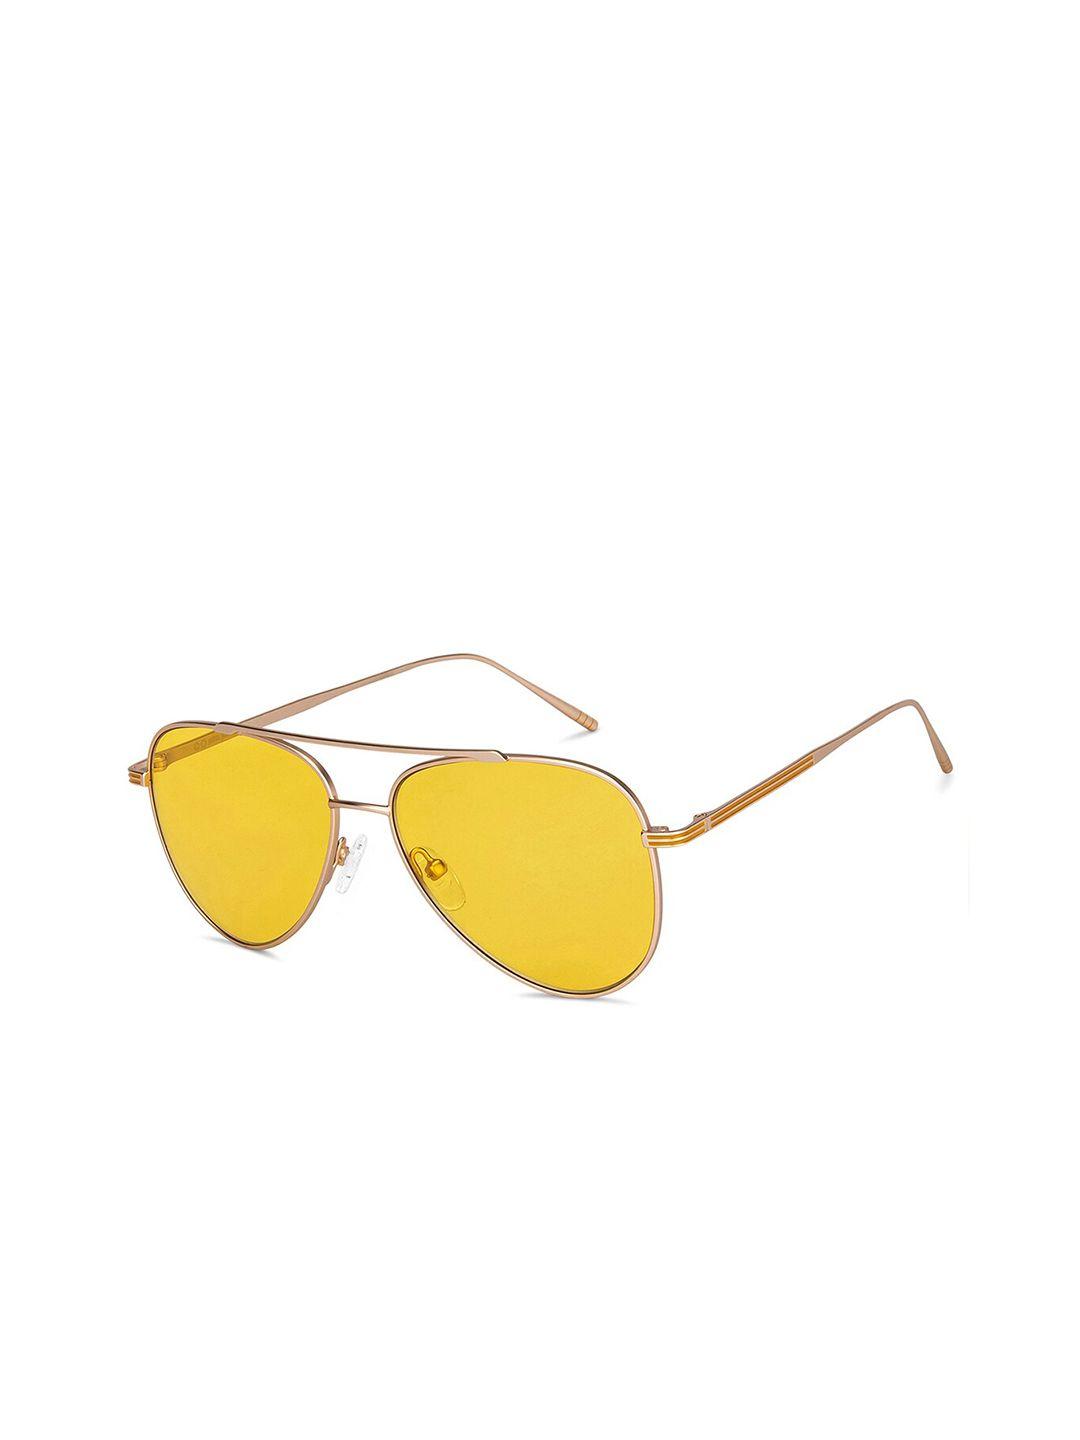 john jacobs unisex yellow lens & gold-toned aviator sunglasses 148395